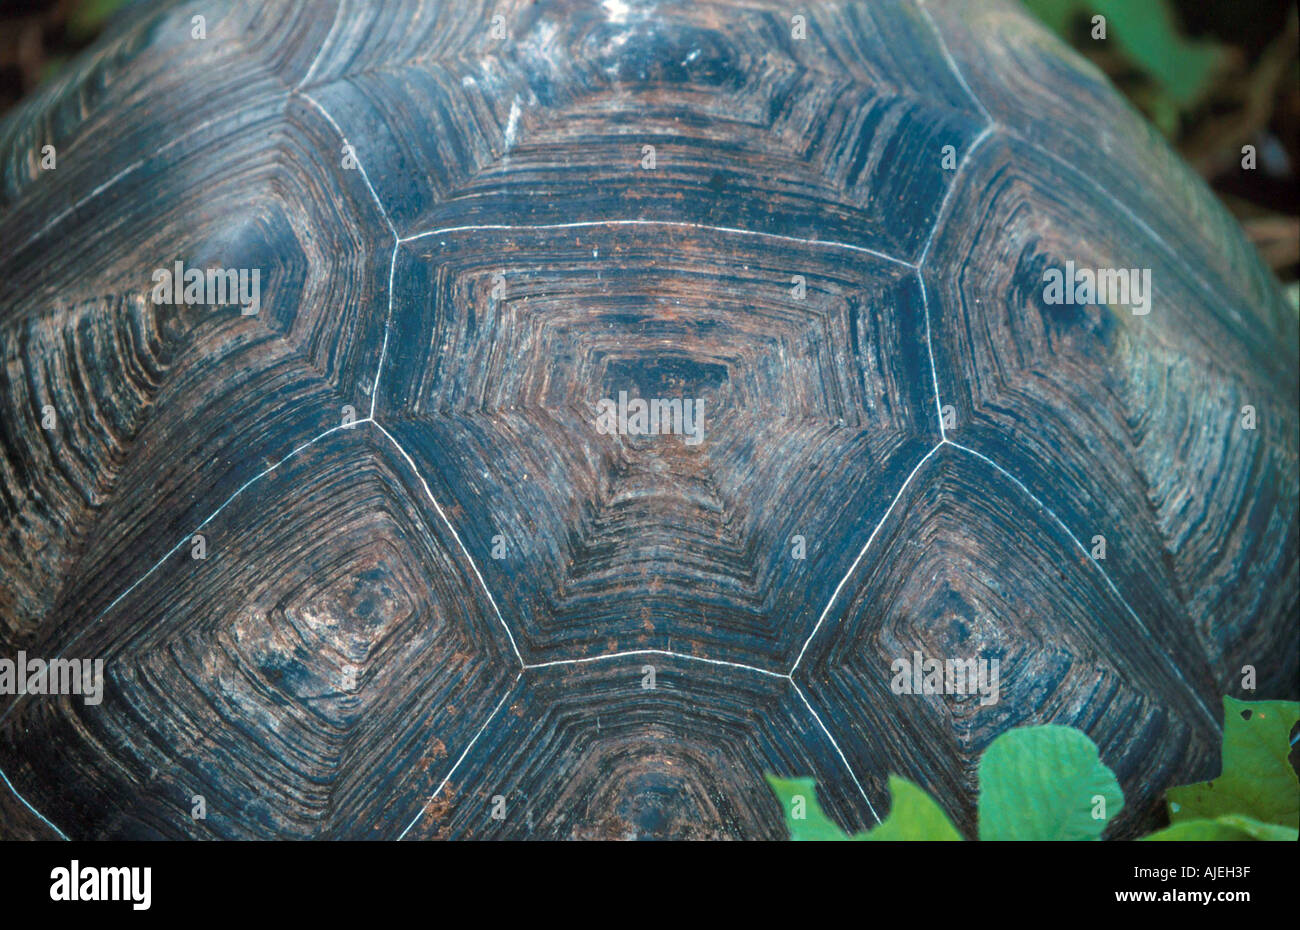 Riesige Schildkröte Geochelone Elephantopus Nahaufnahme von Shell Muster Isabela V Alcedo Rennen Stockfoto